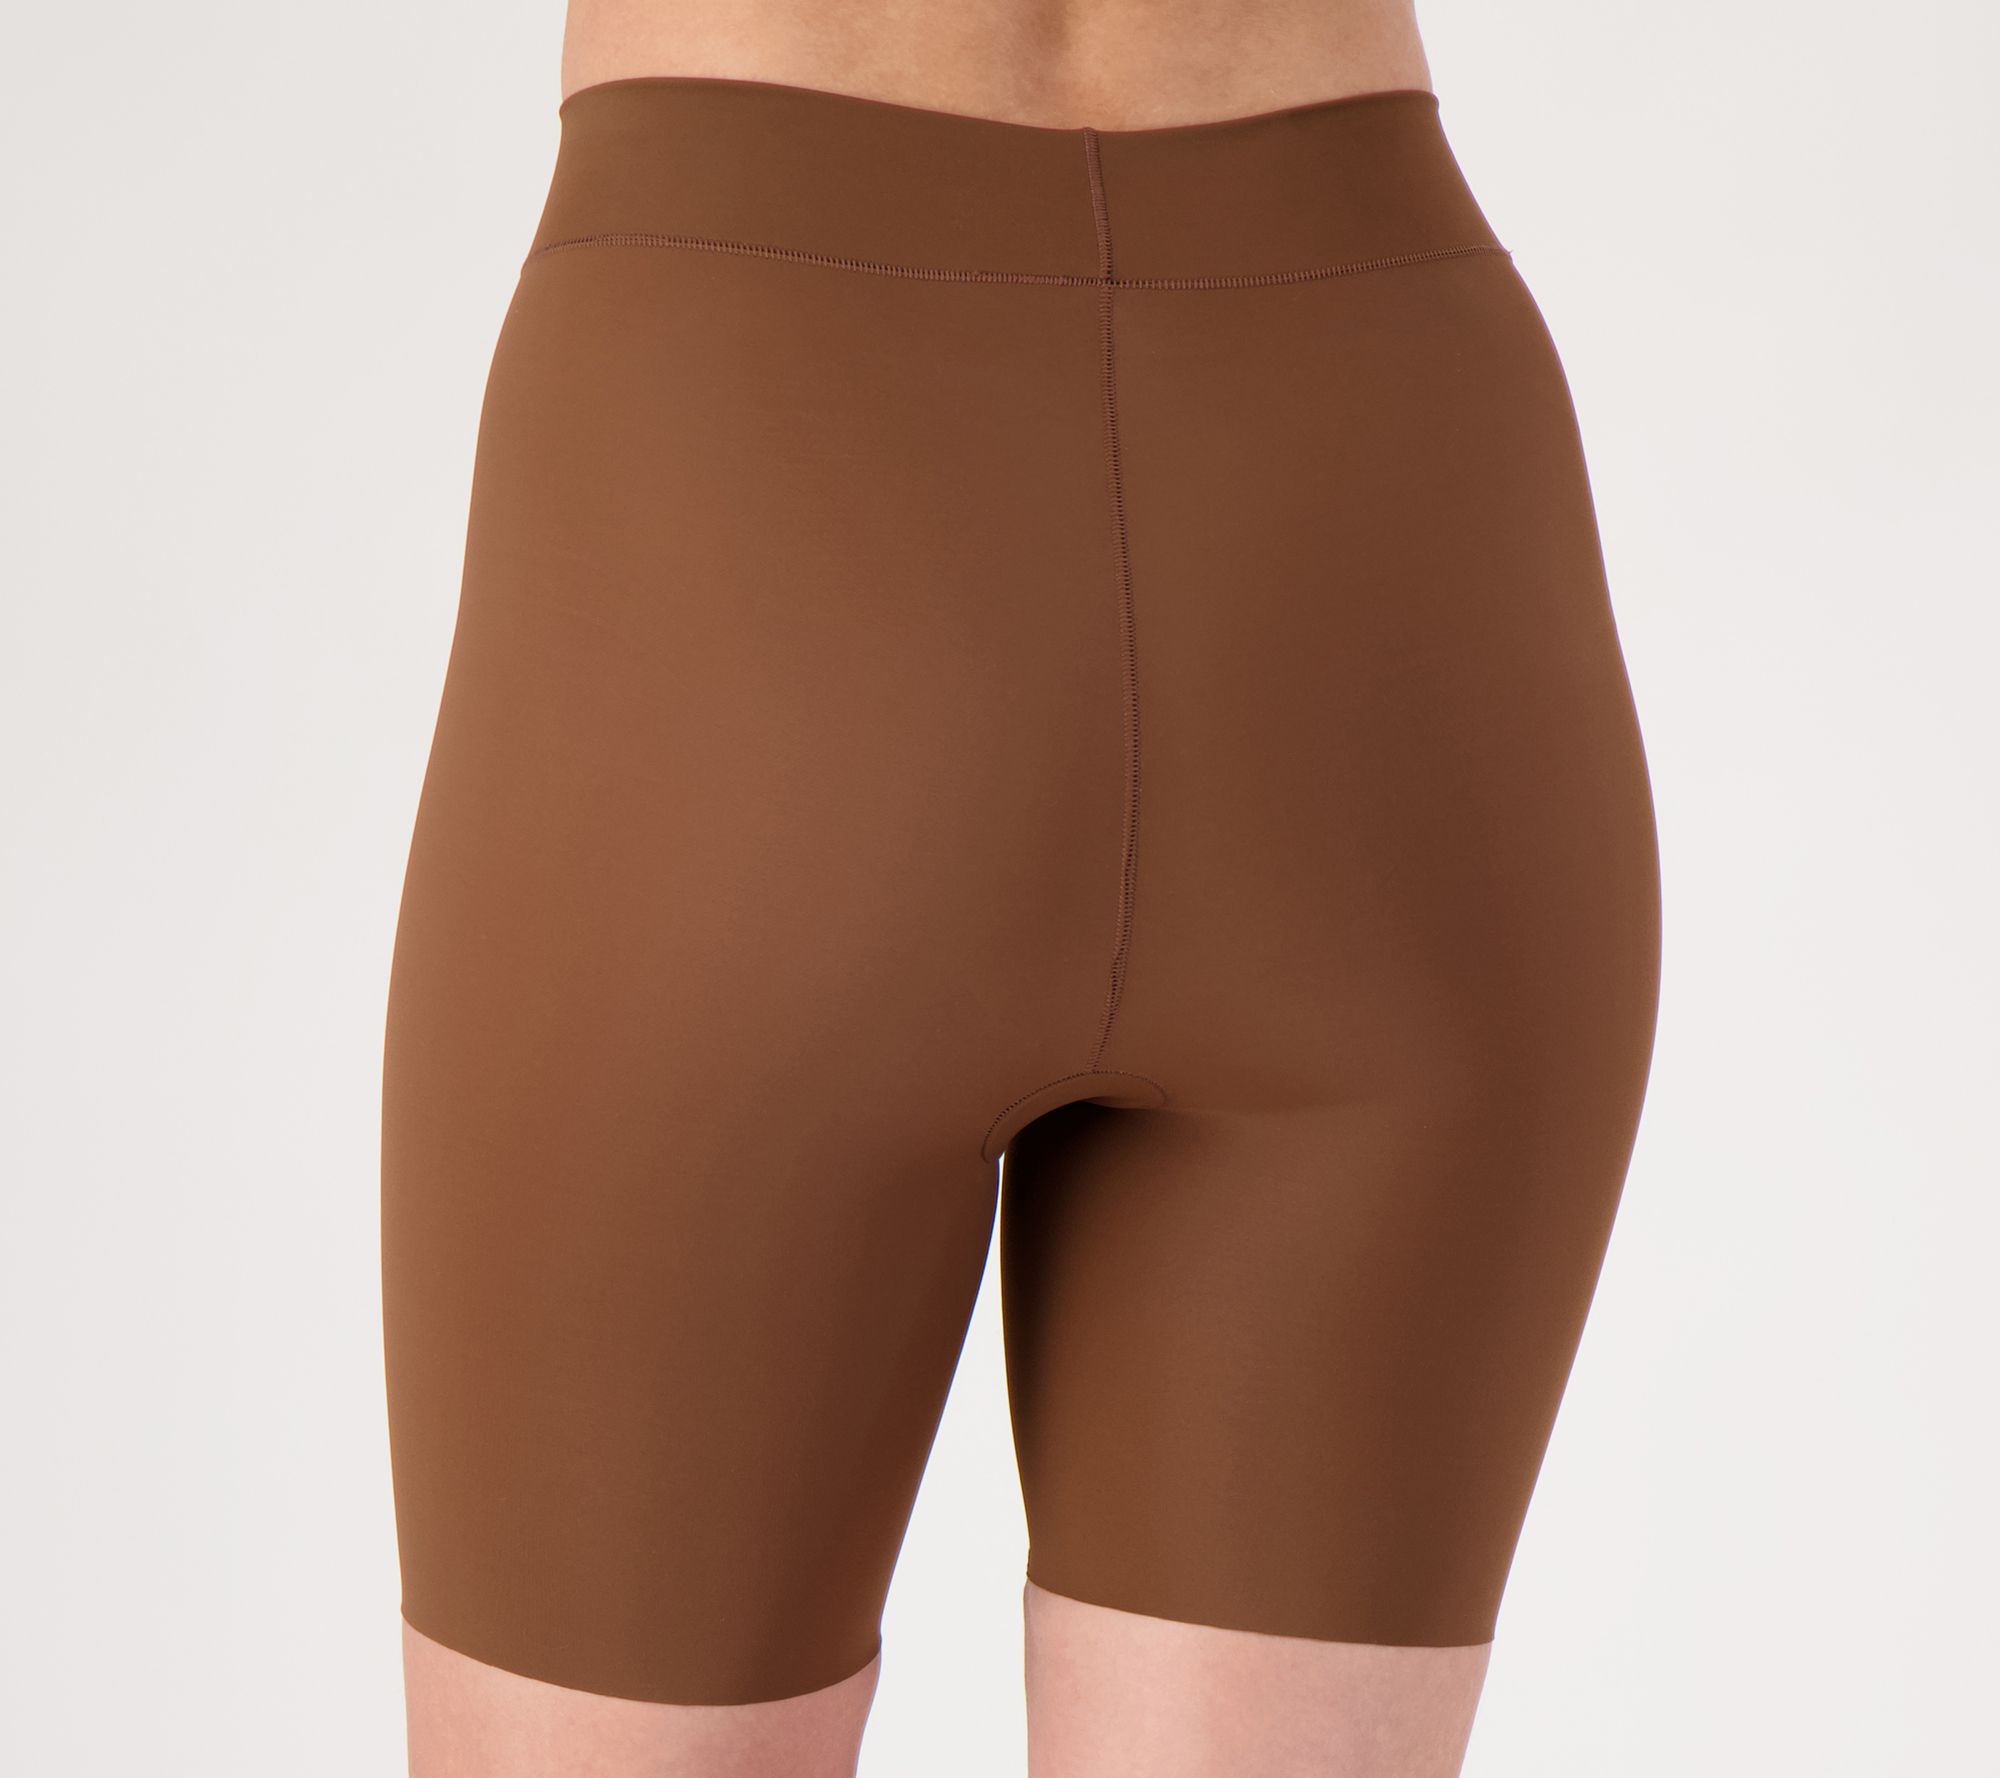 Amazingjoys Seamless Slip Shorts Women's Smooth Slip Panties for